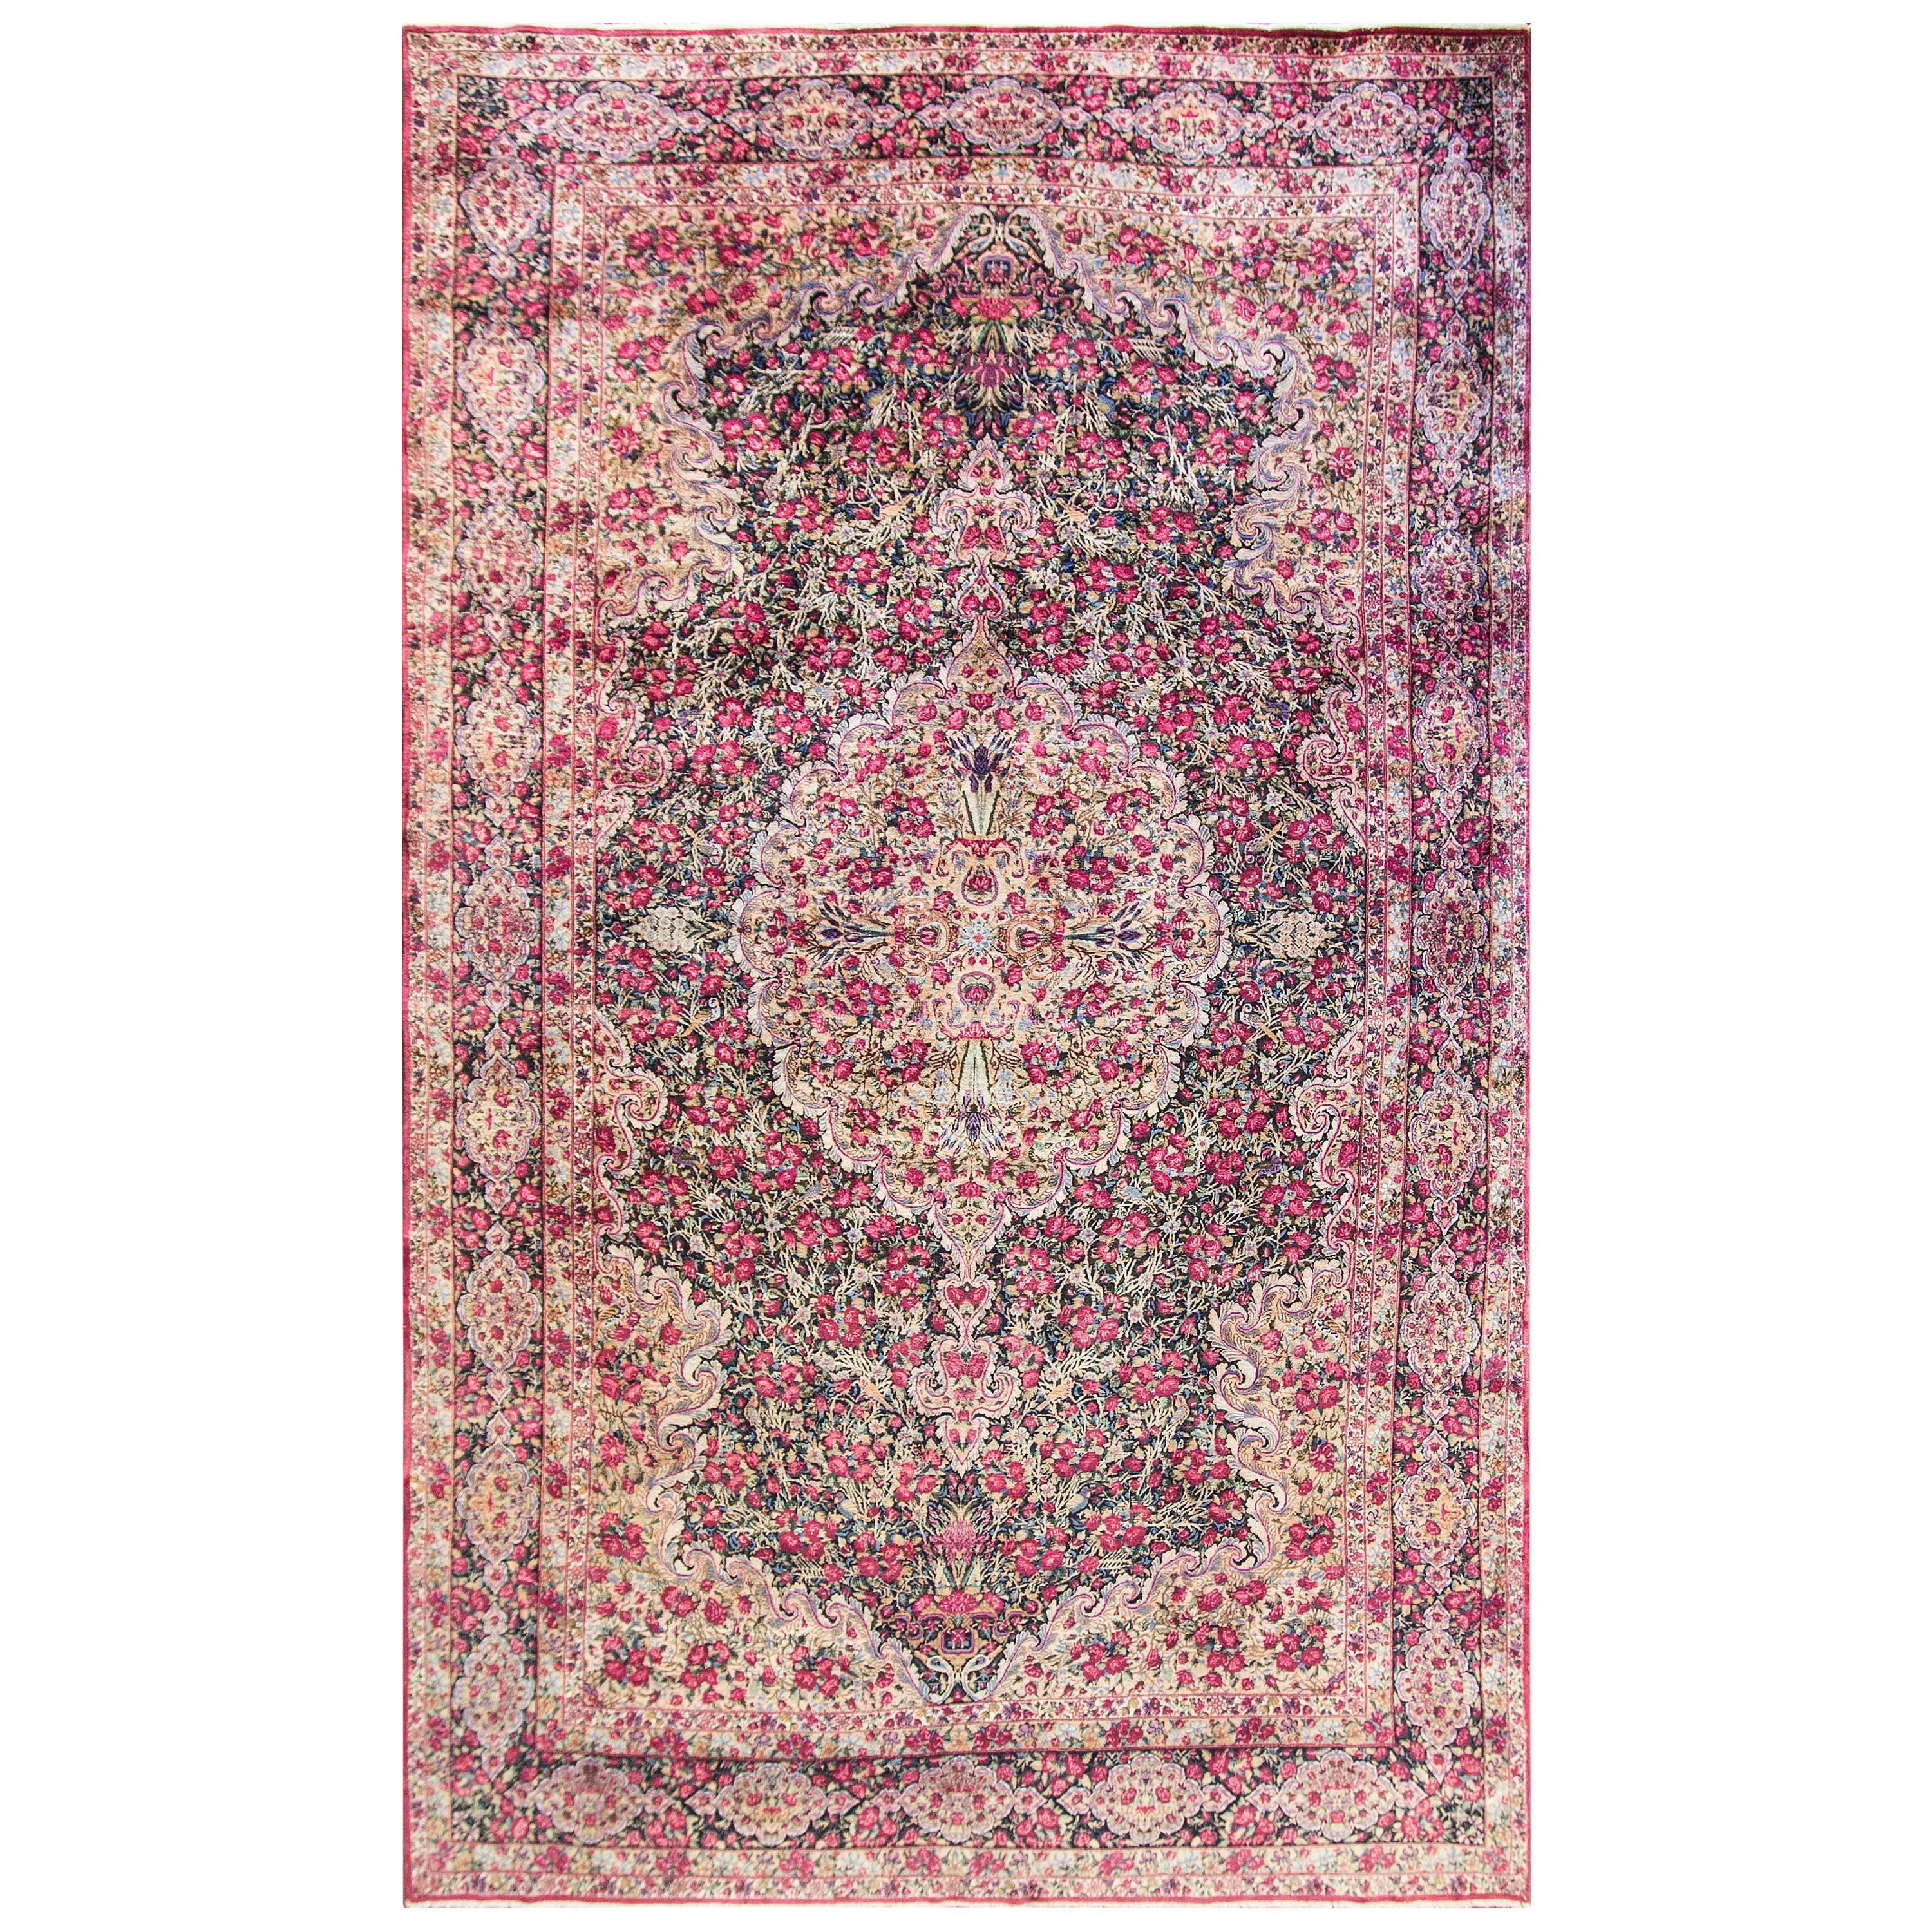 Antique Persian Kerman laver Carpet, circa 1920s, 8'8" x 14'9"